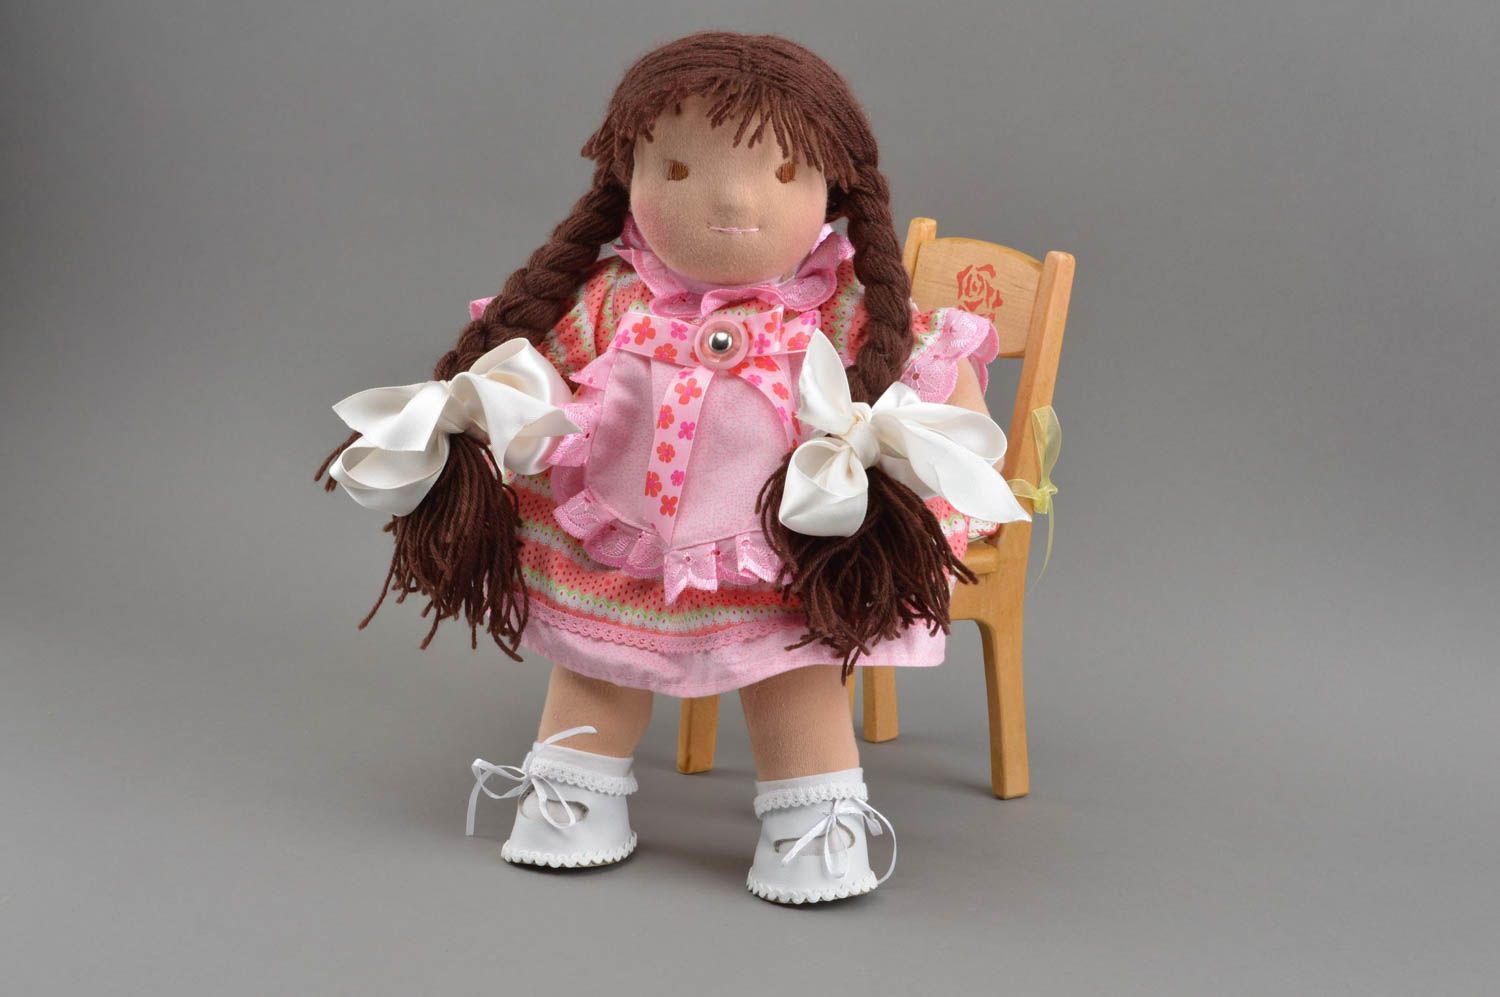 Muñeca artesanal hecha a mano de tela regalos para niñas decoración de hogar foto 2